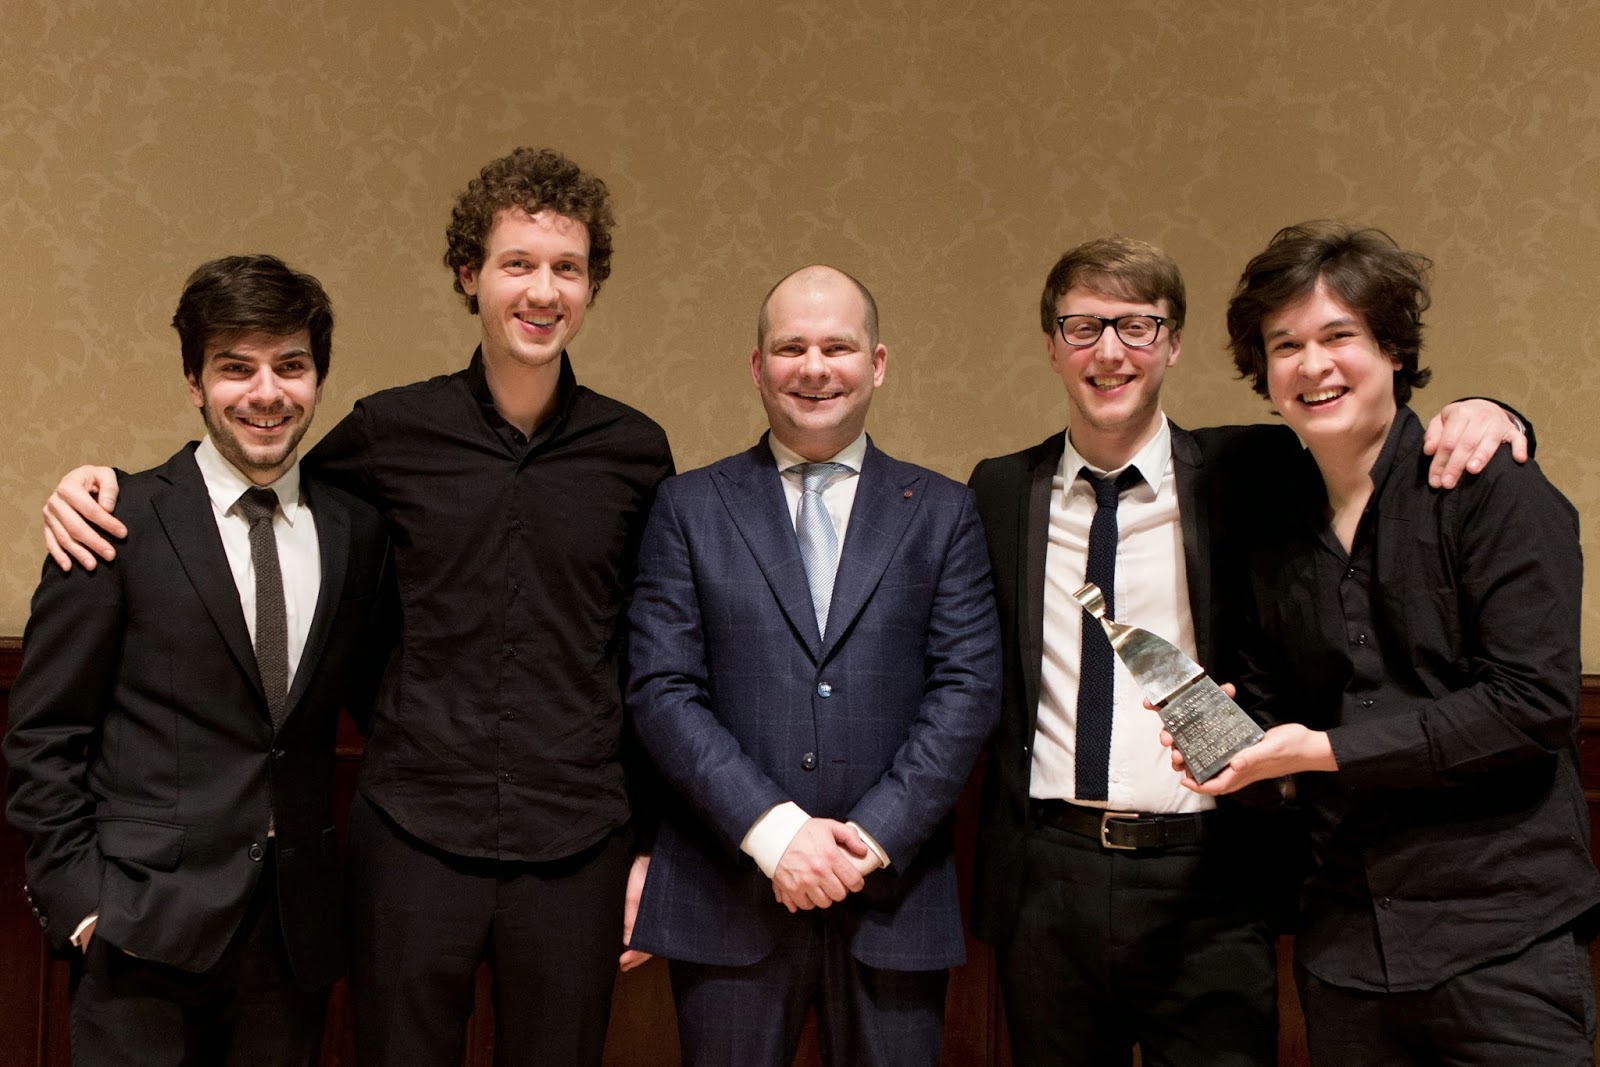 Van Kuijk Quartet receiving their award from competition chairman John Gilhooly - photo Ben Ealovega